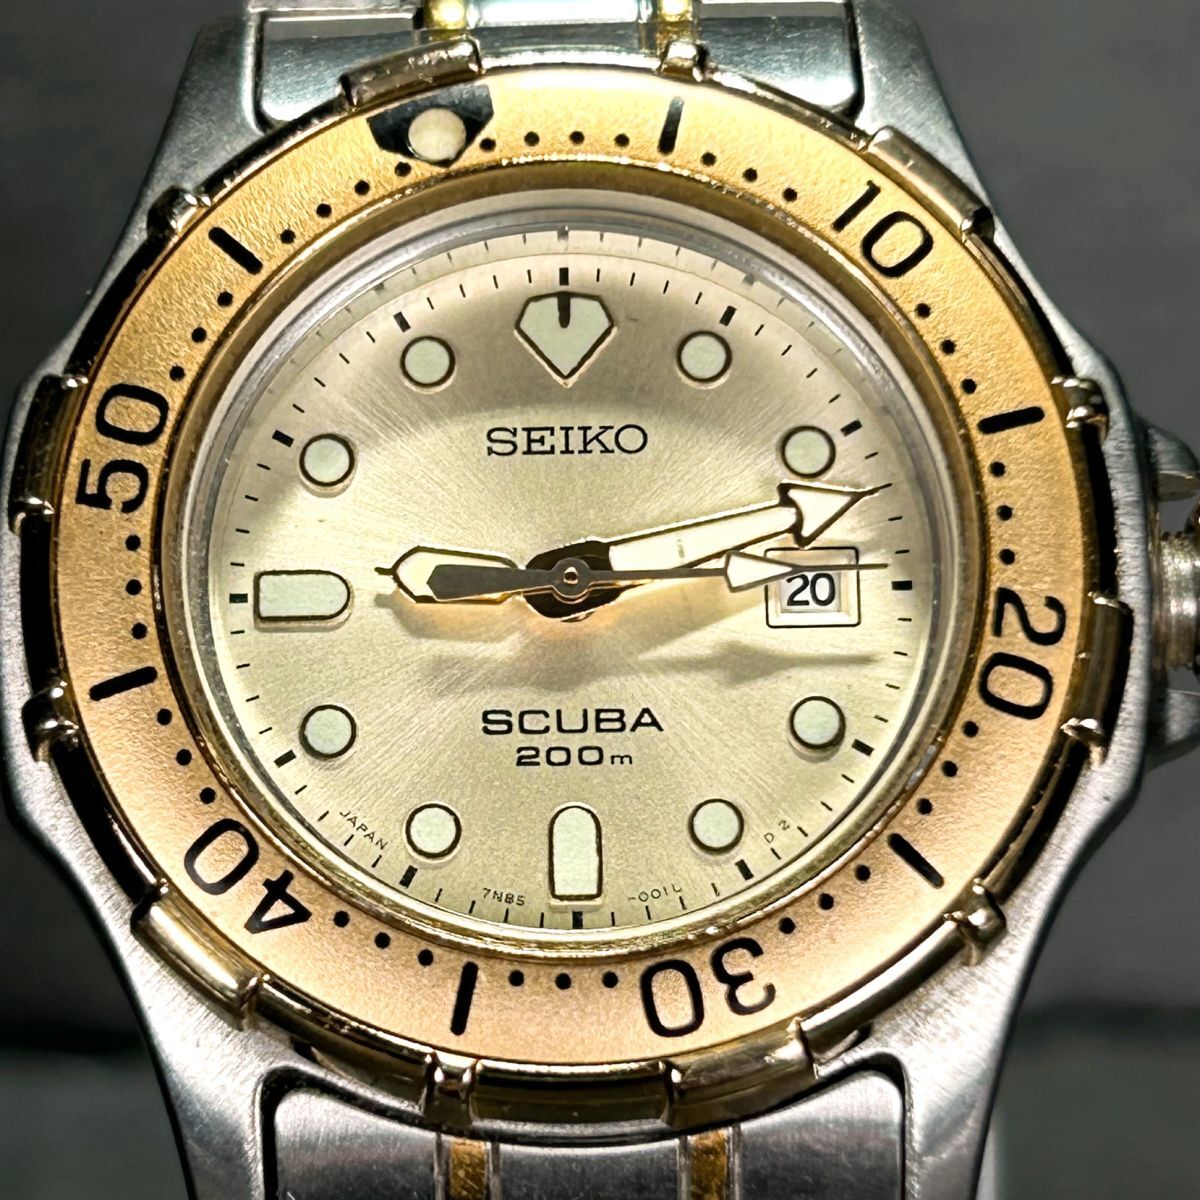 SEIKO セイコー SCUBA200m 7N85-0010 腕時計 クオーツ アナログ カレンダー 回転ベゼル ダイバーズウオッチ 新品電池交換済み 動作確認済み_画像3